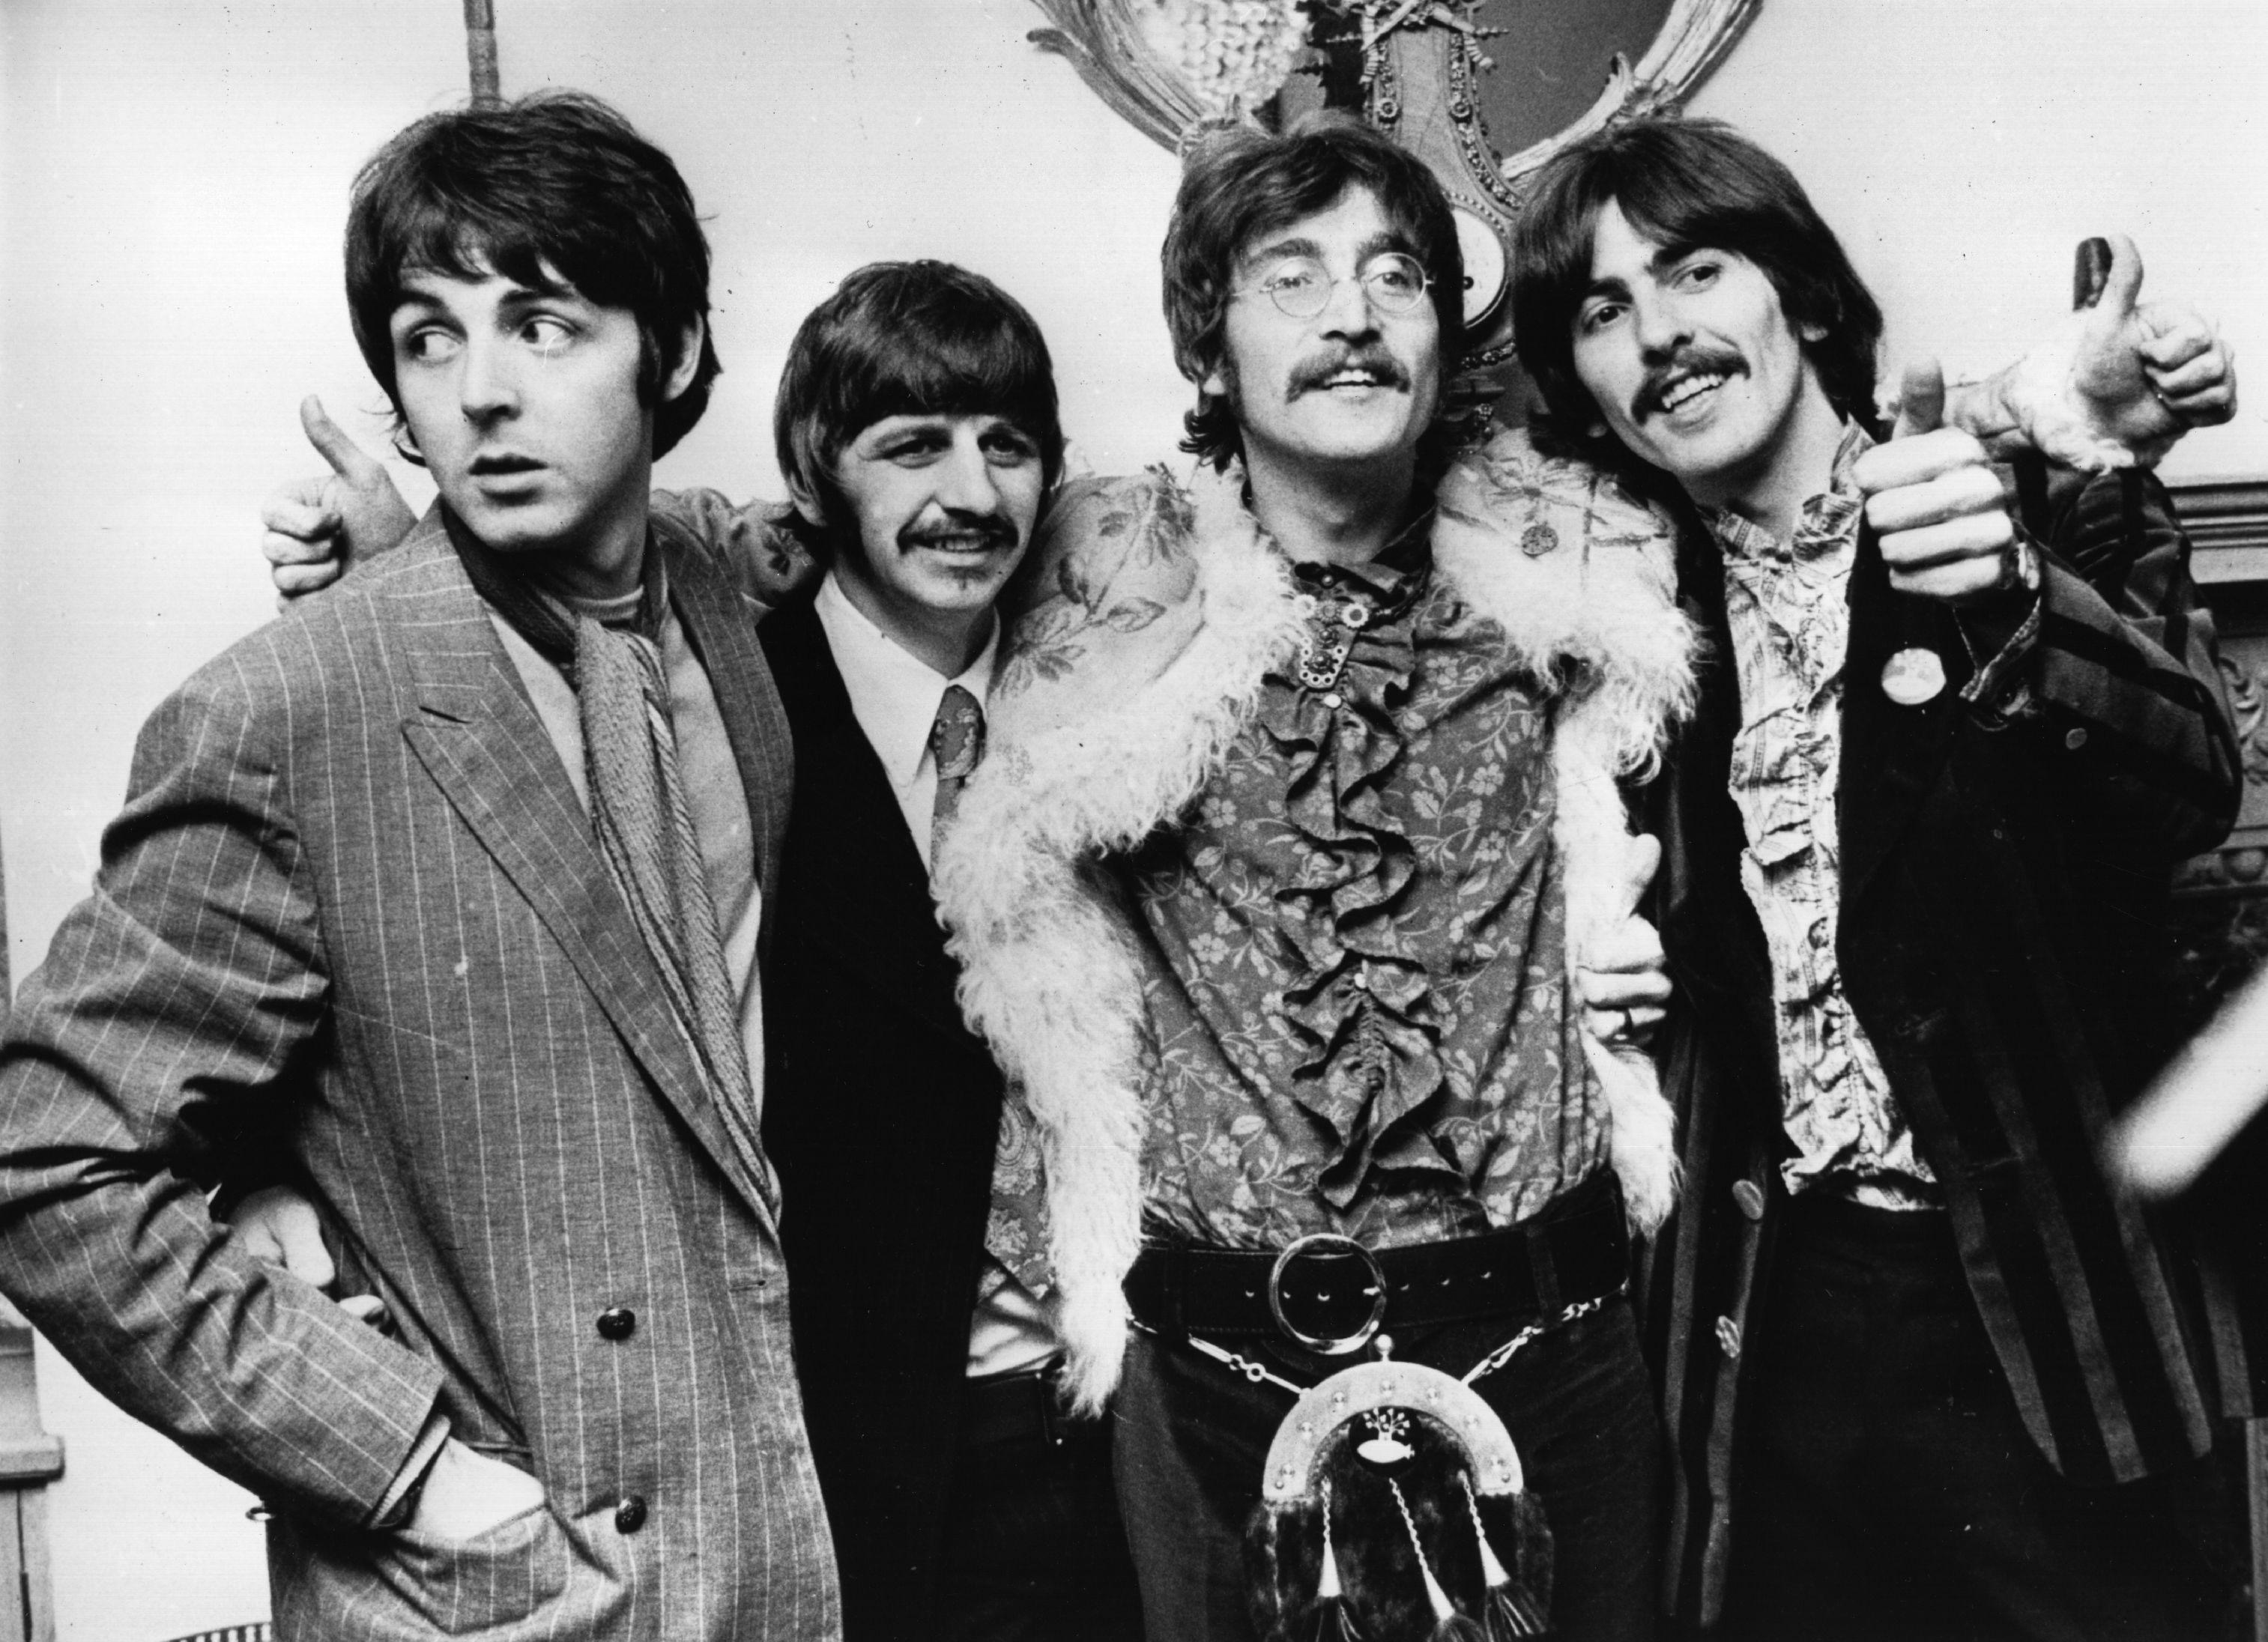 The Beatles‘ Paul McCartney, Ringo Starr, John Lennon, and George Harrison standing in a row